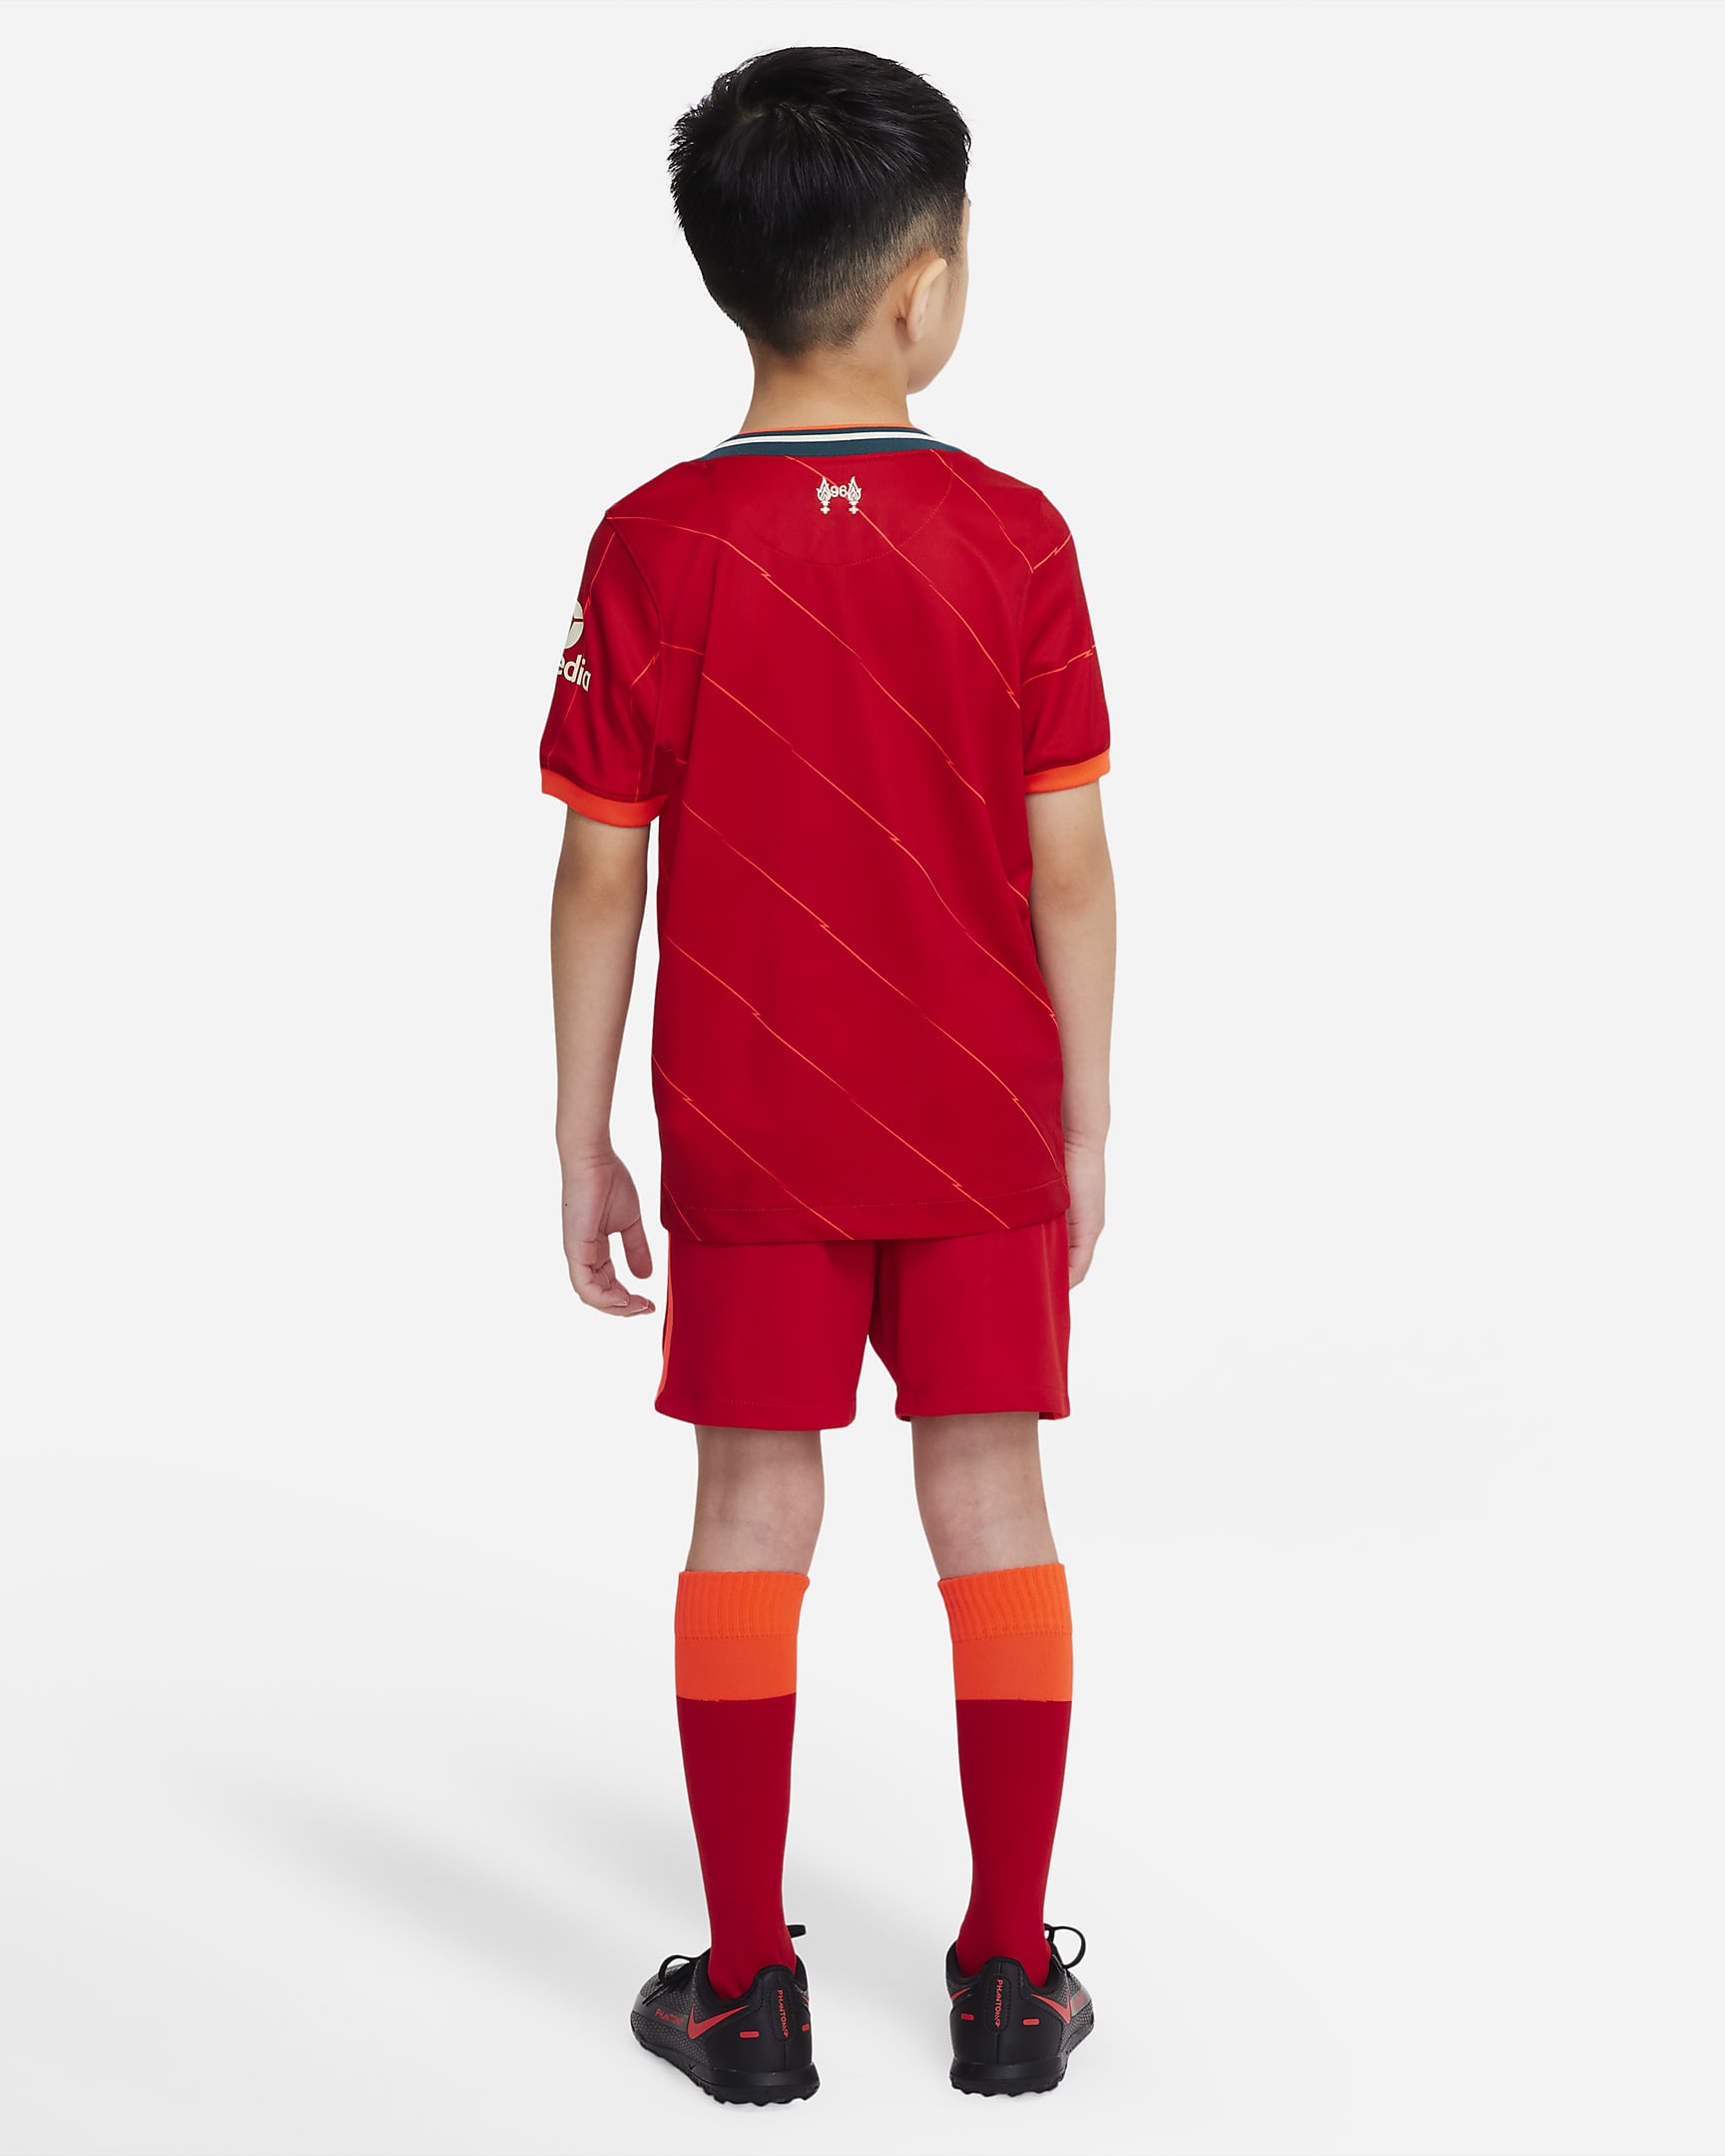 Liverpool FC 2021/22 Home Little Kids' Soccer Kit. Nike.com